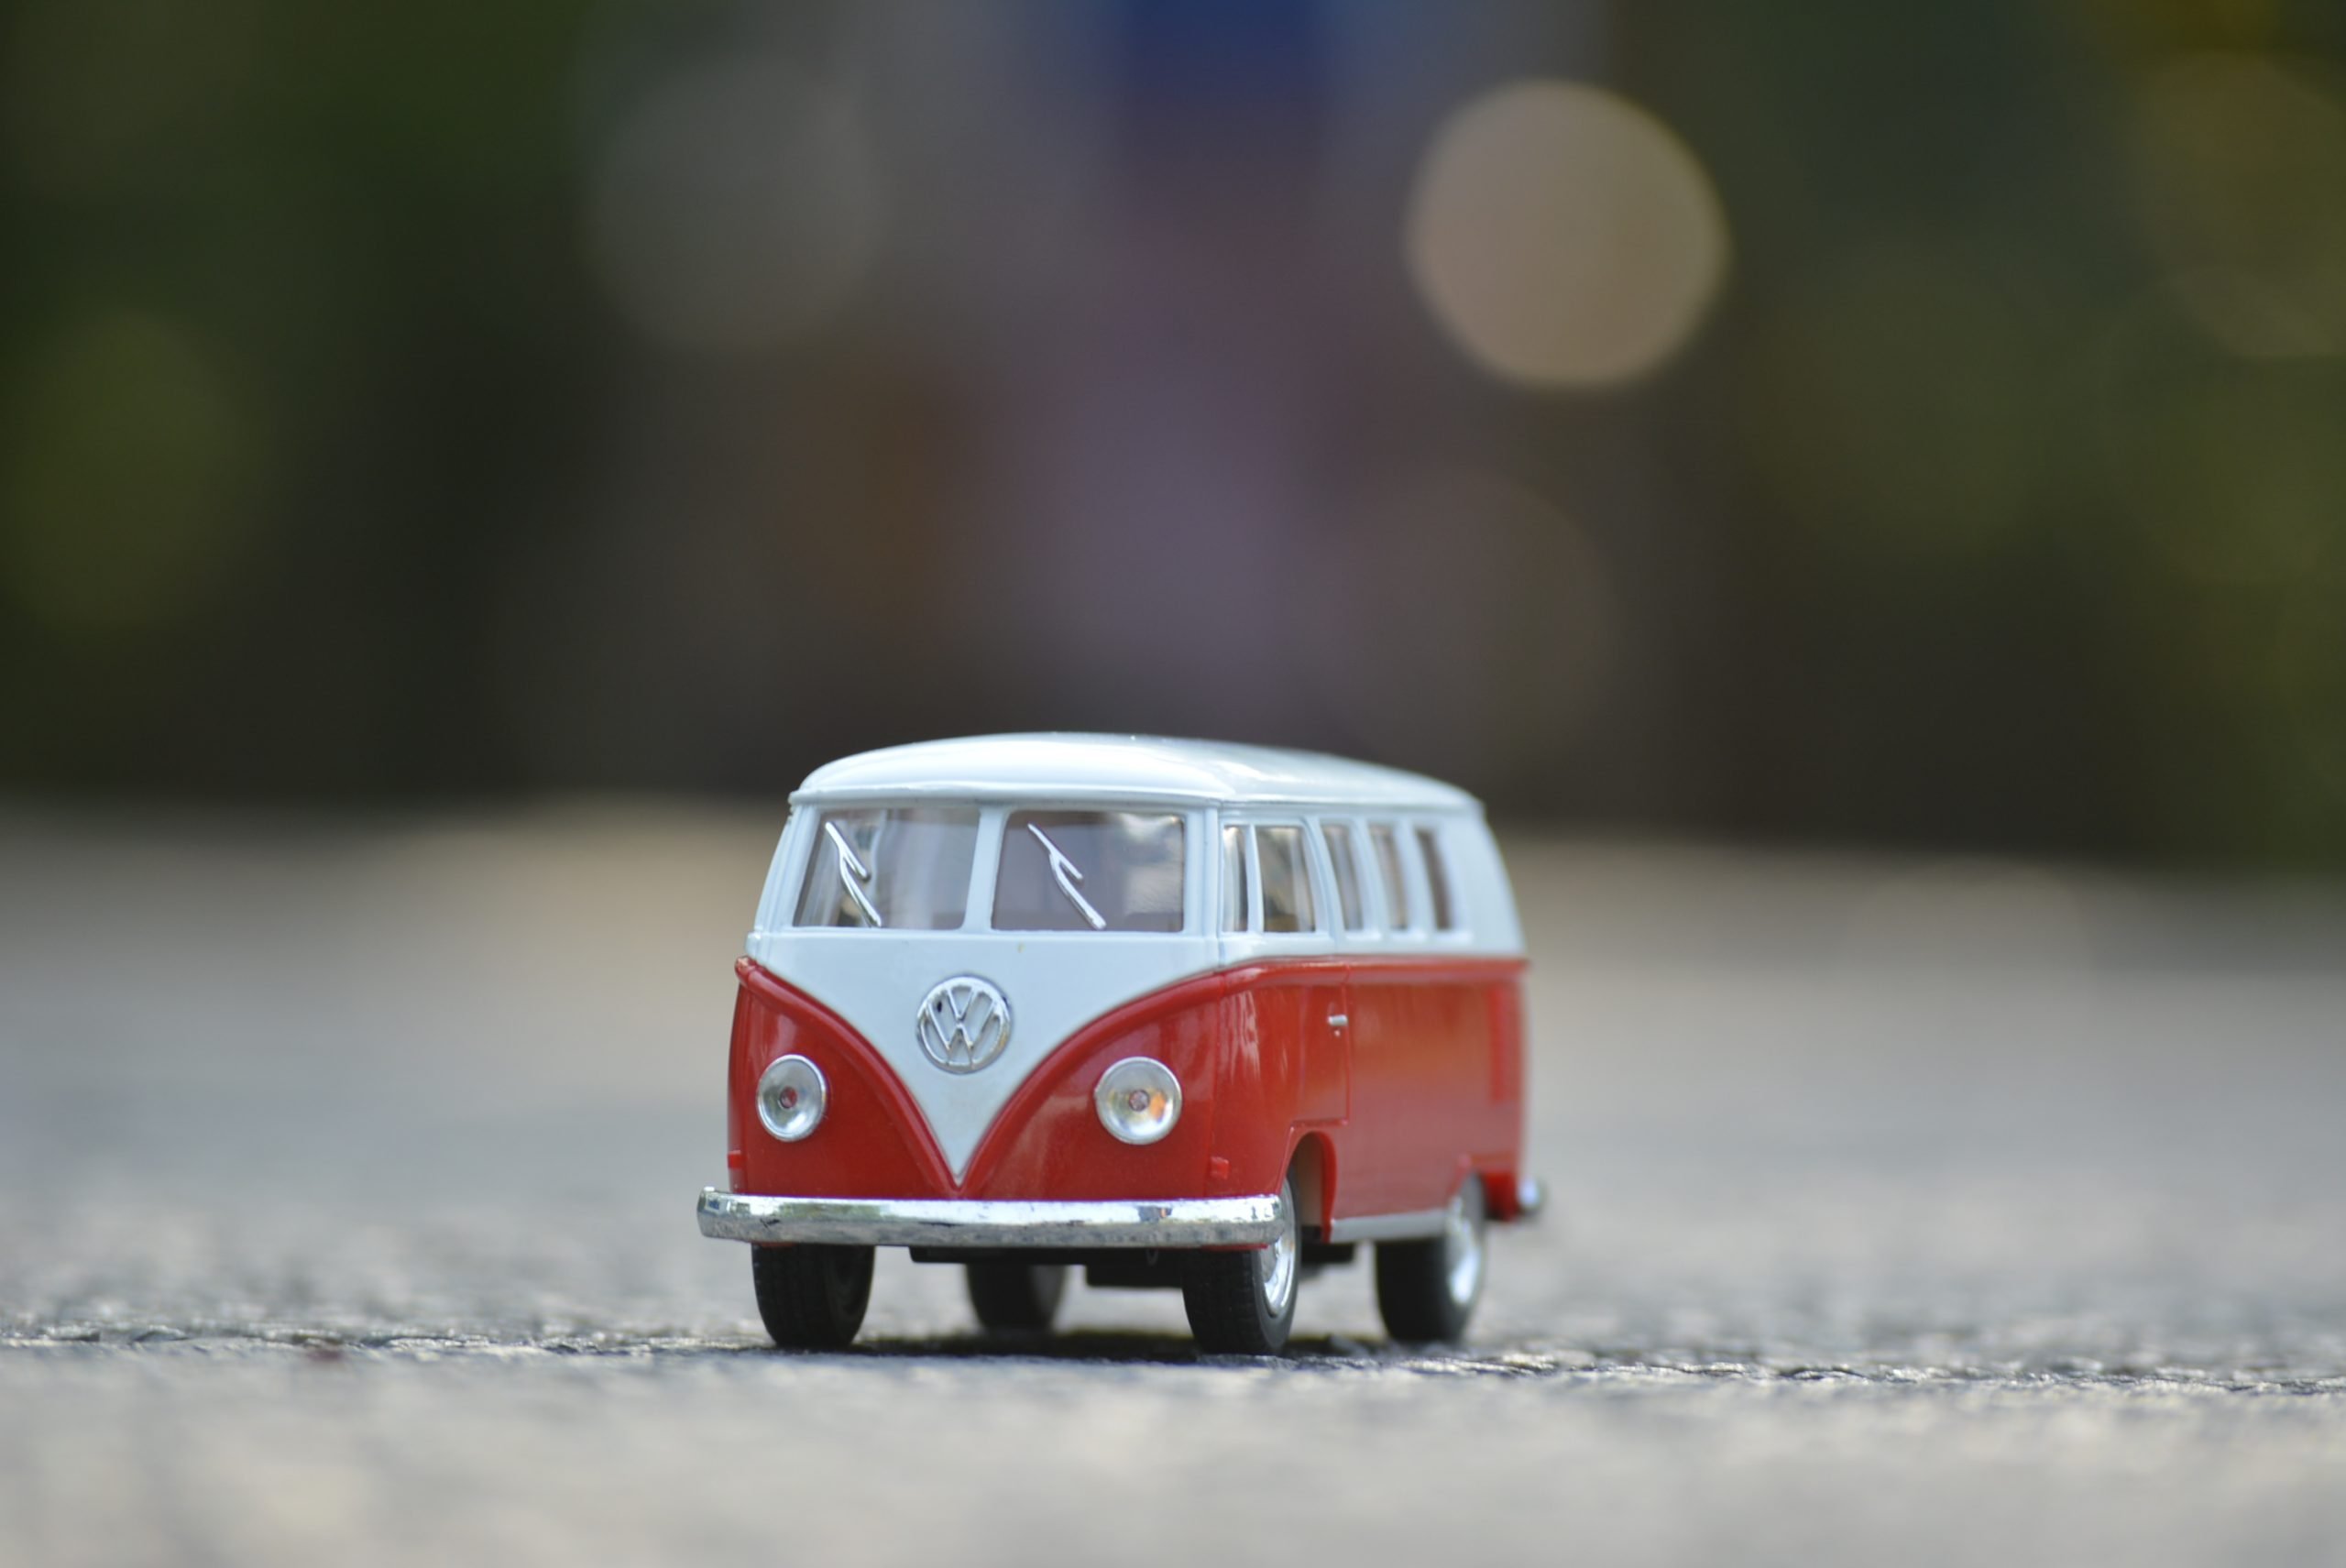 30 Best Volkswagen Quotes and Captions